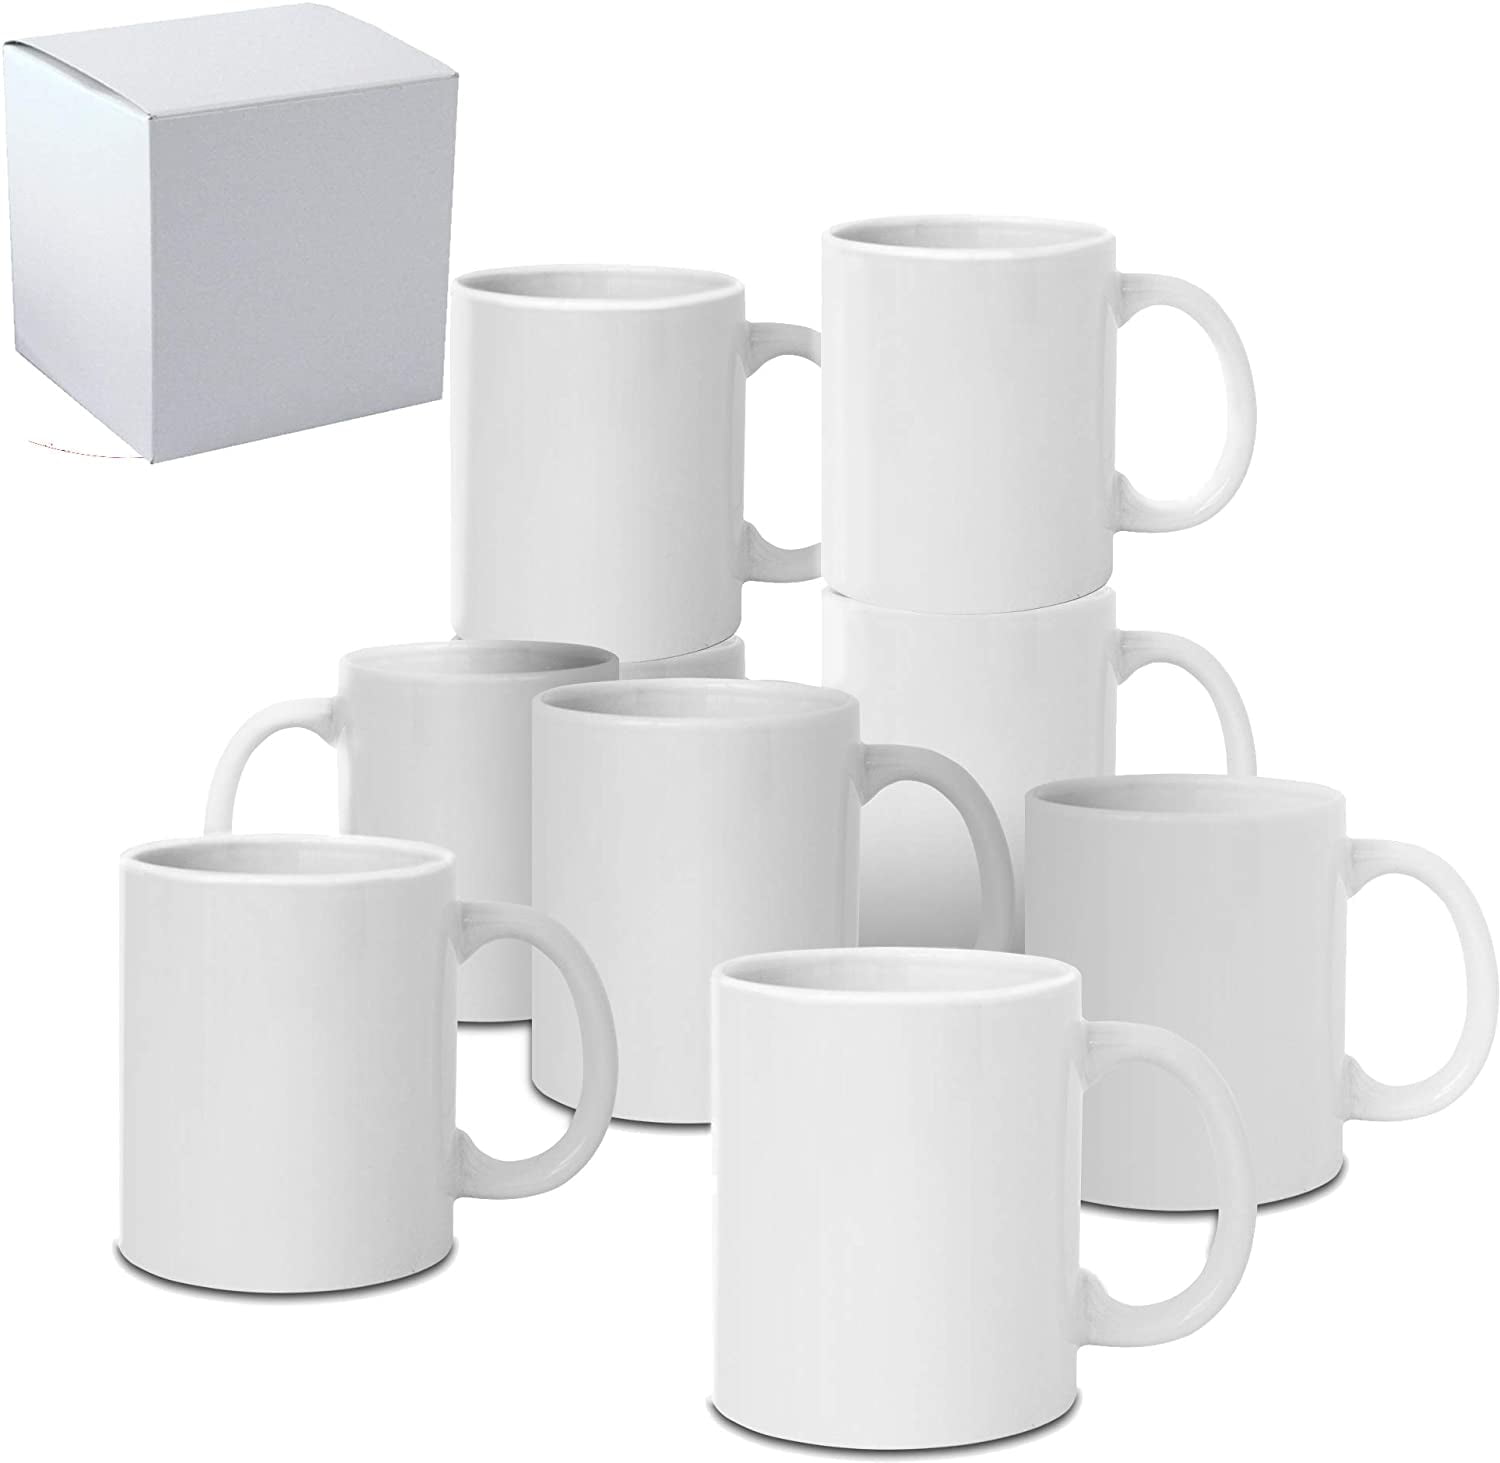 11oz Ceramic Mugs for Sublimation Printing - AGC Education